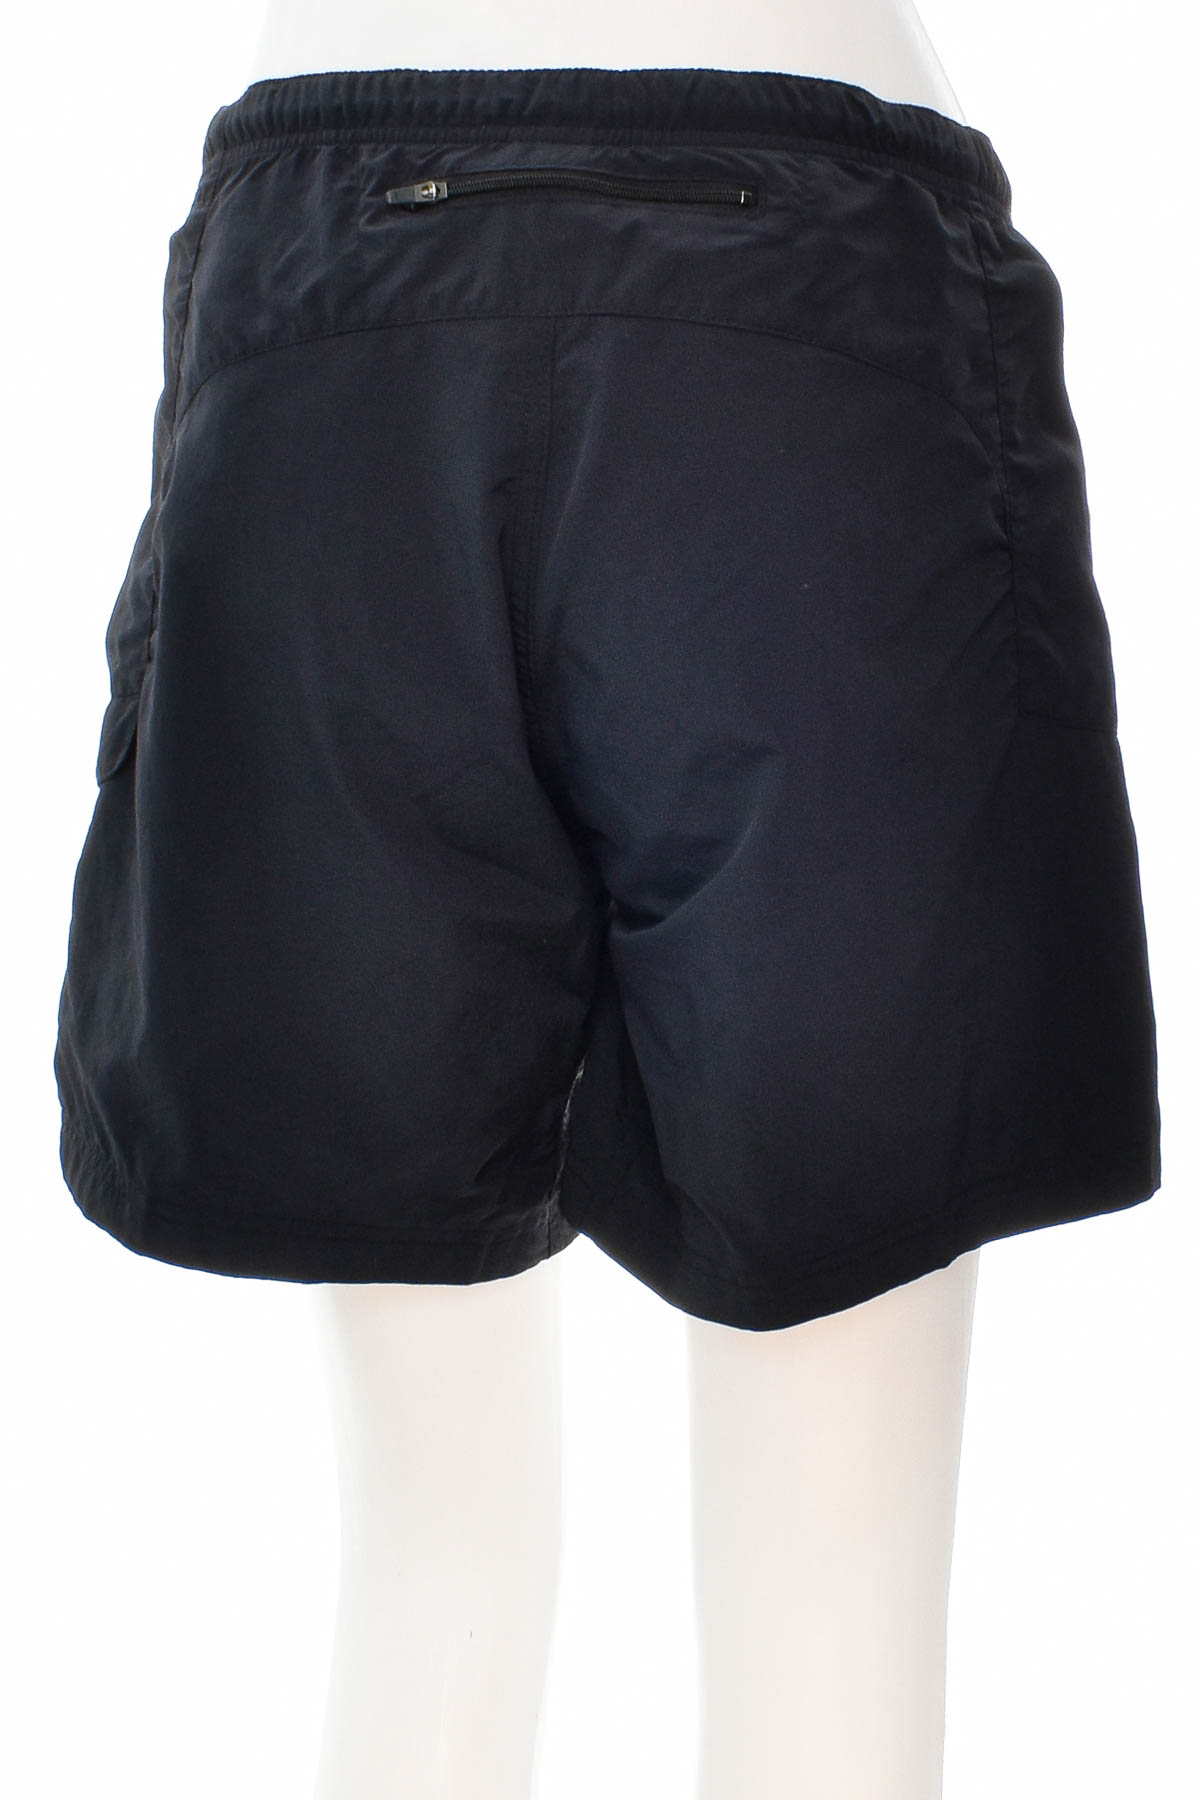 Female shorts - GORE BIKE WEAR - 1